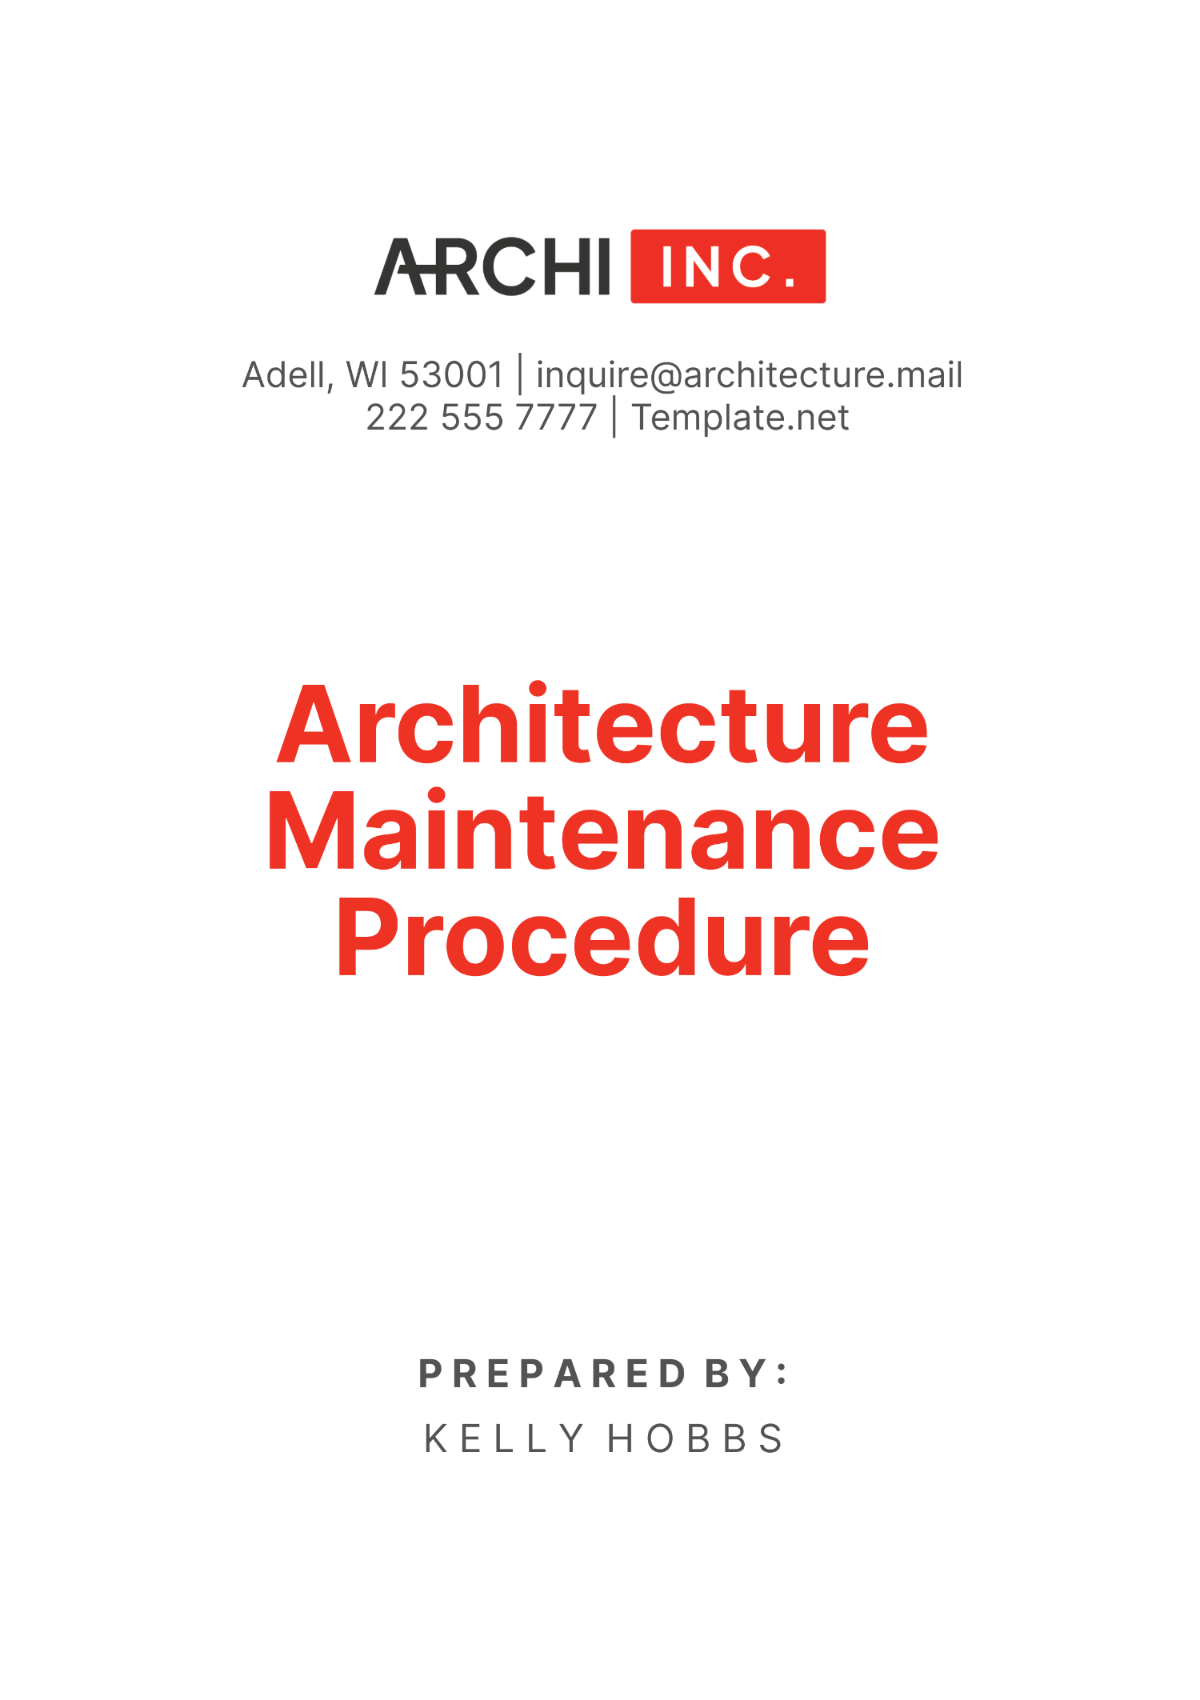 Architecture Maintenance Procedure Template